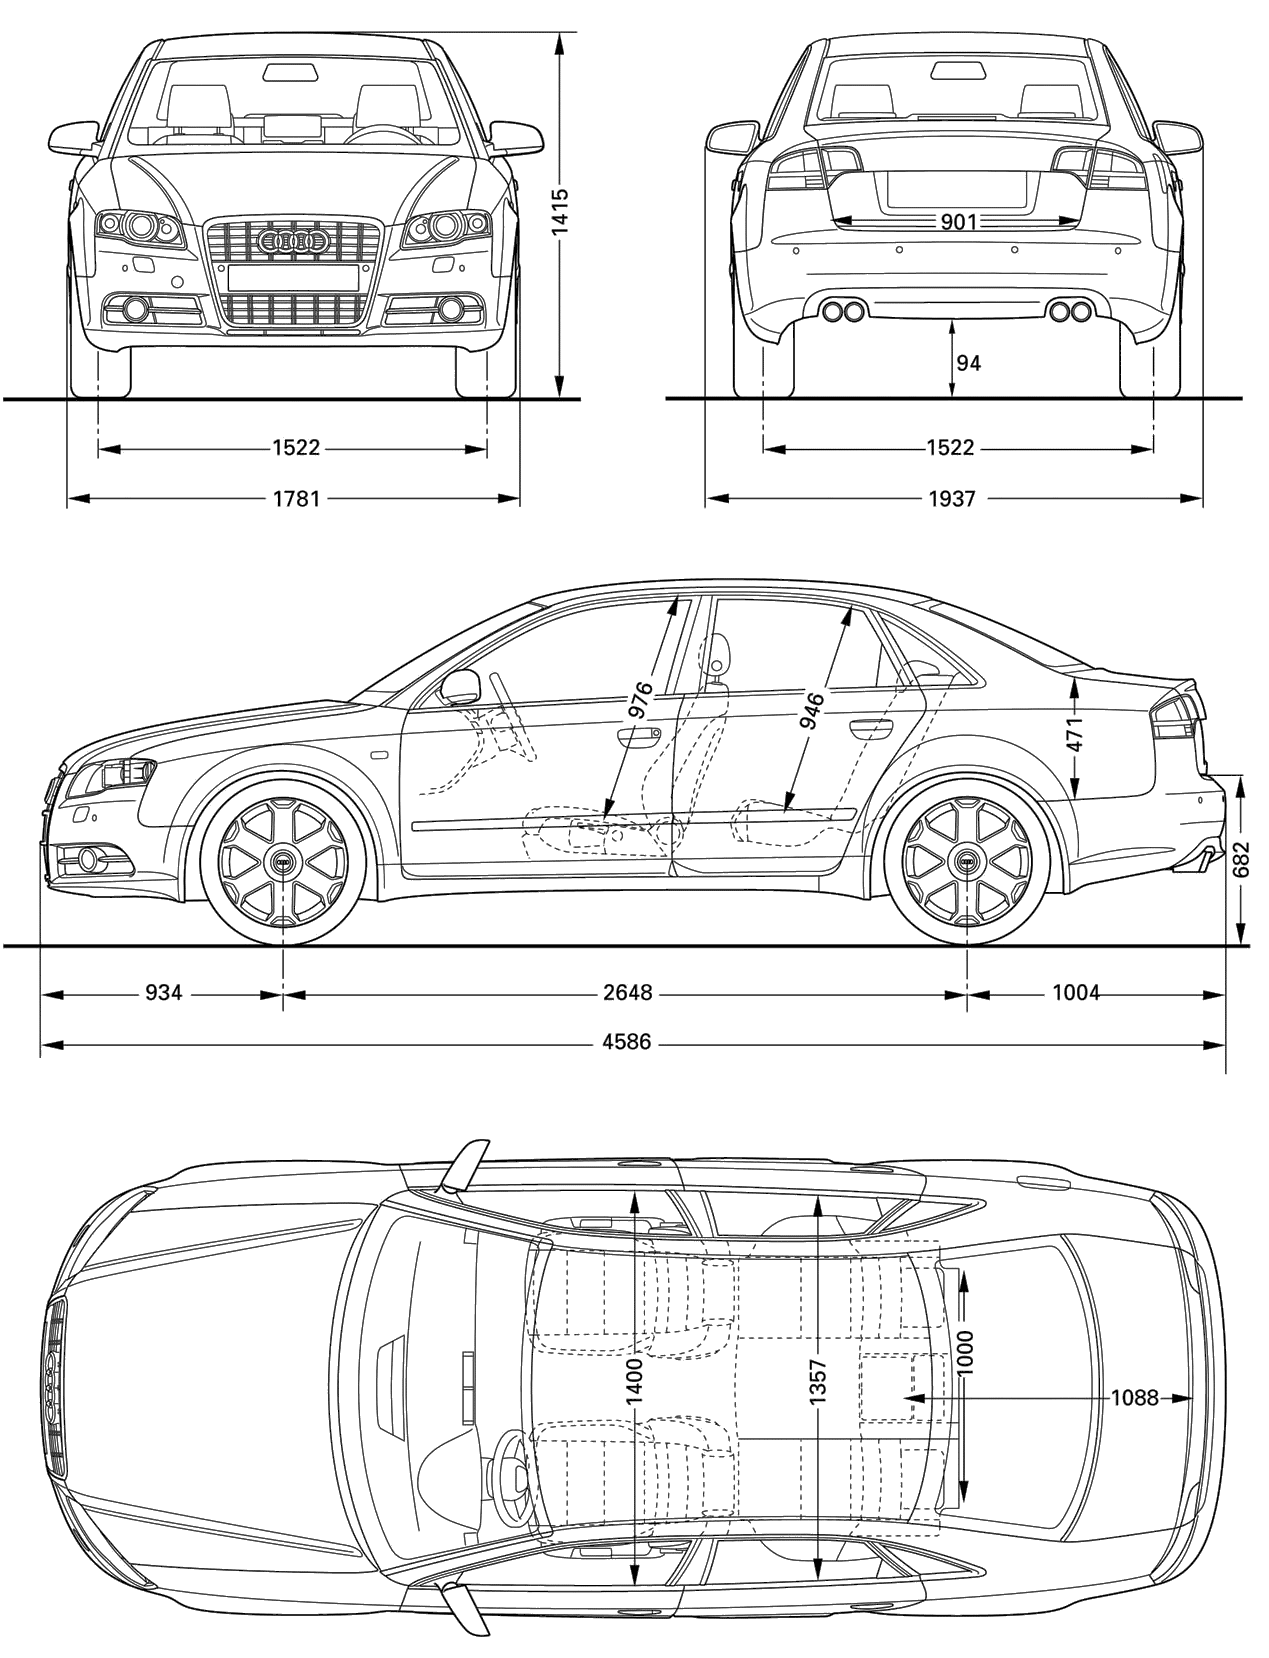 2008 Audi S4 B7 (Typ 8H) Cabriolet blueprints free - Outlines